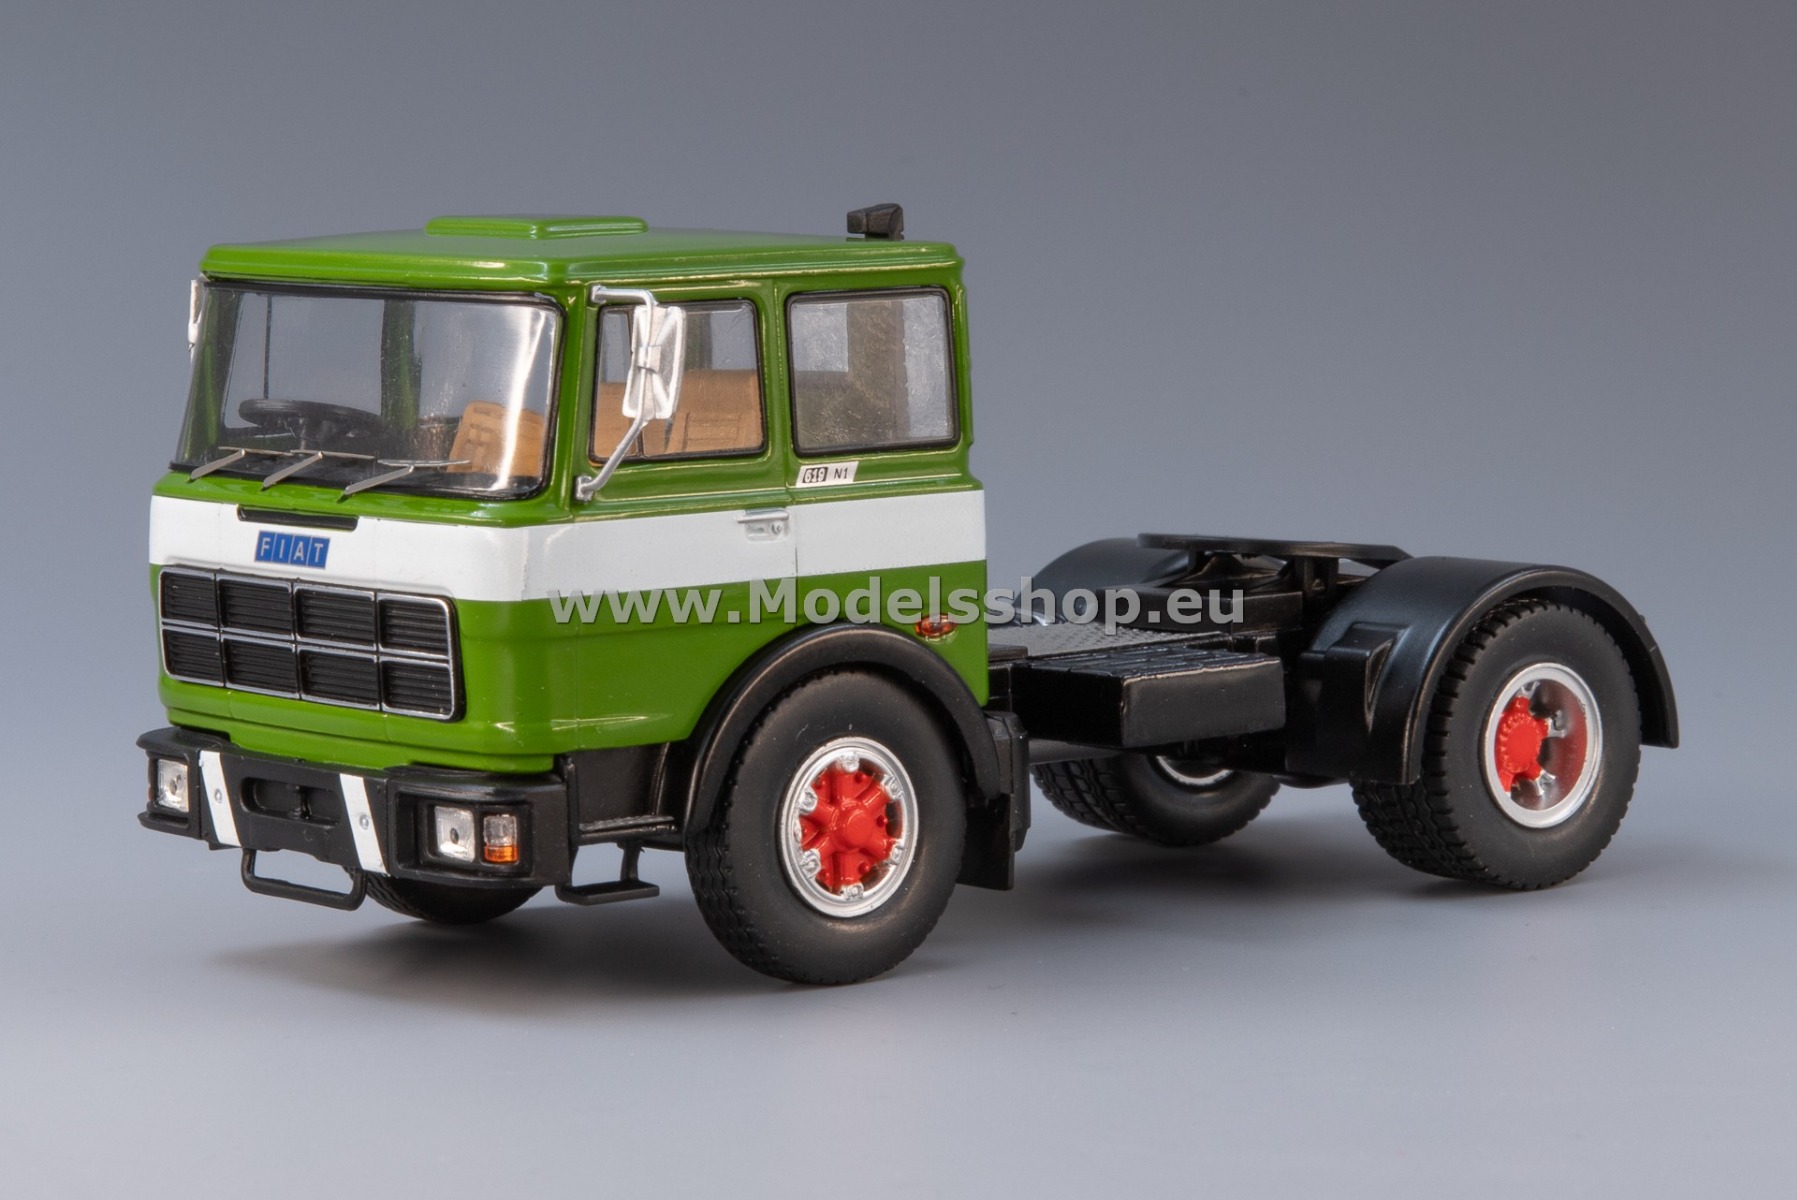 IXO TR147.22 Fiat 619 N1 tractor truck, 1980 /green - white/